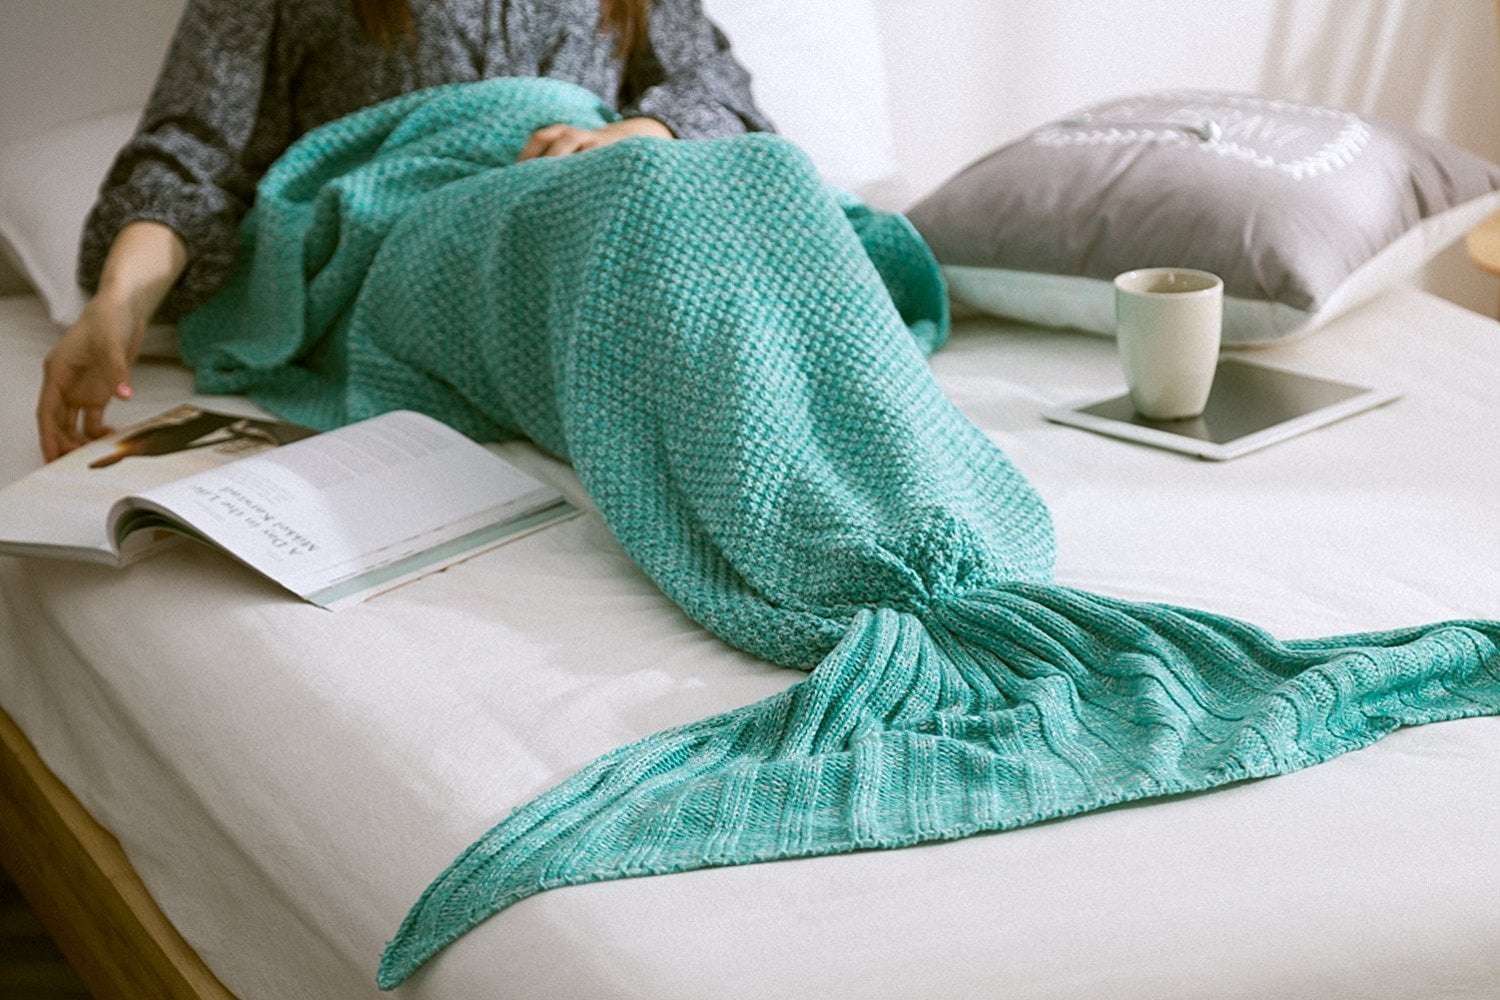 Crochet Blankets Mermaid Tail Blanket Throw Adult Sleeping Bag Bedding 71"x35.5" 